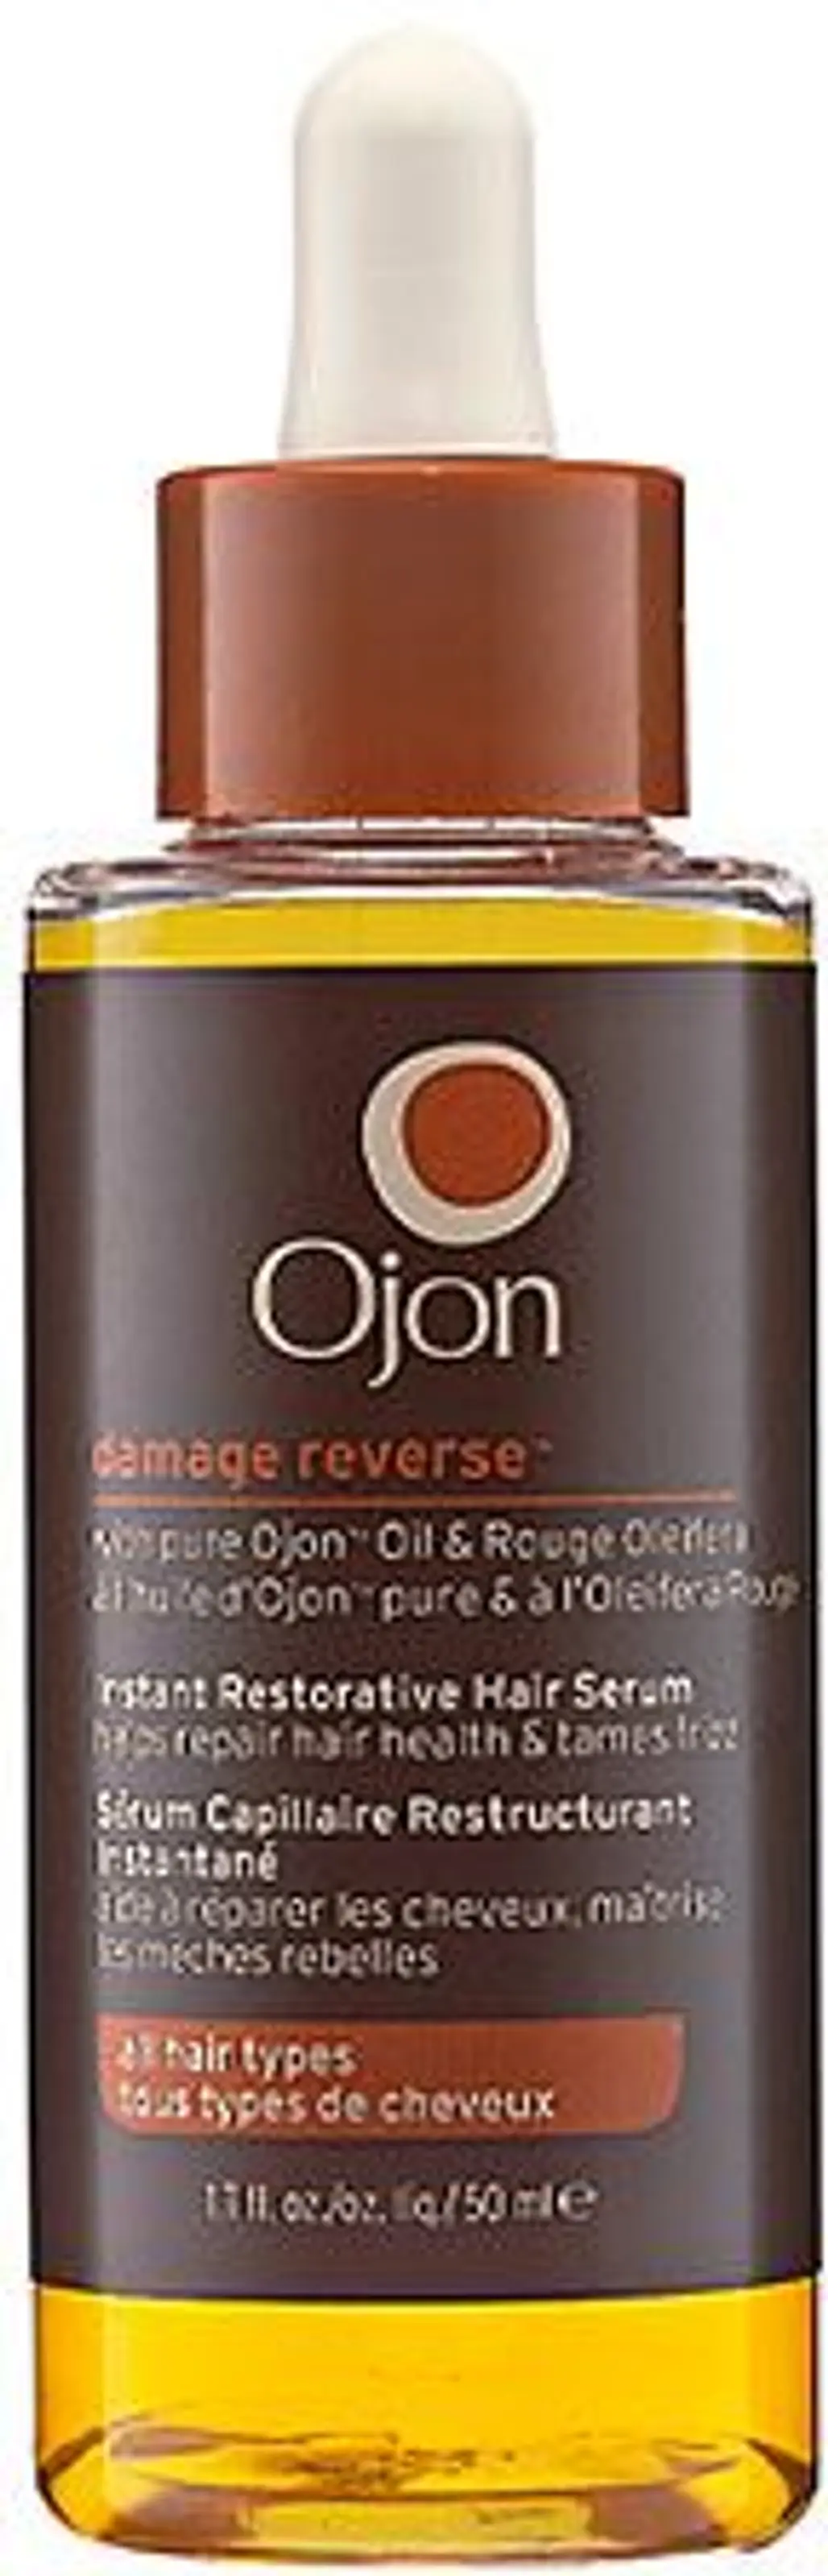 Ojon Damage Reverse Instant Restorative Hair Serum